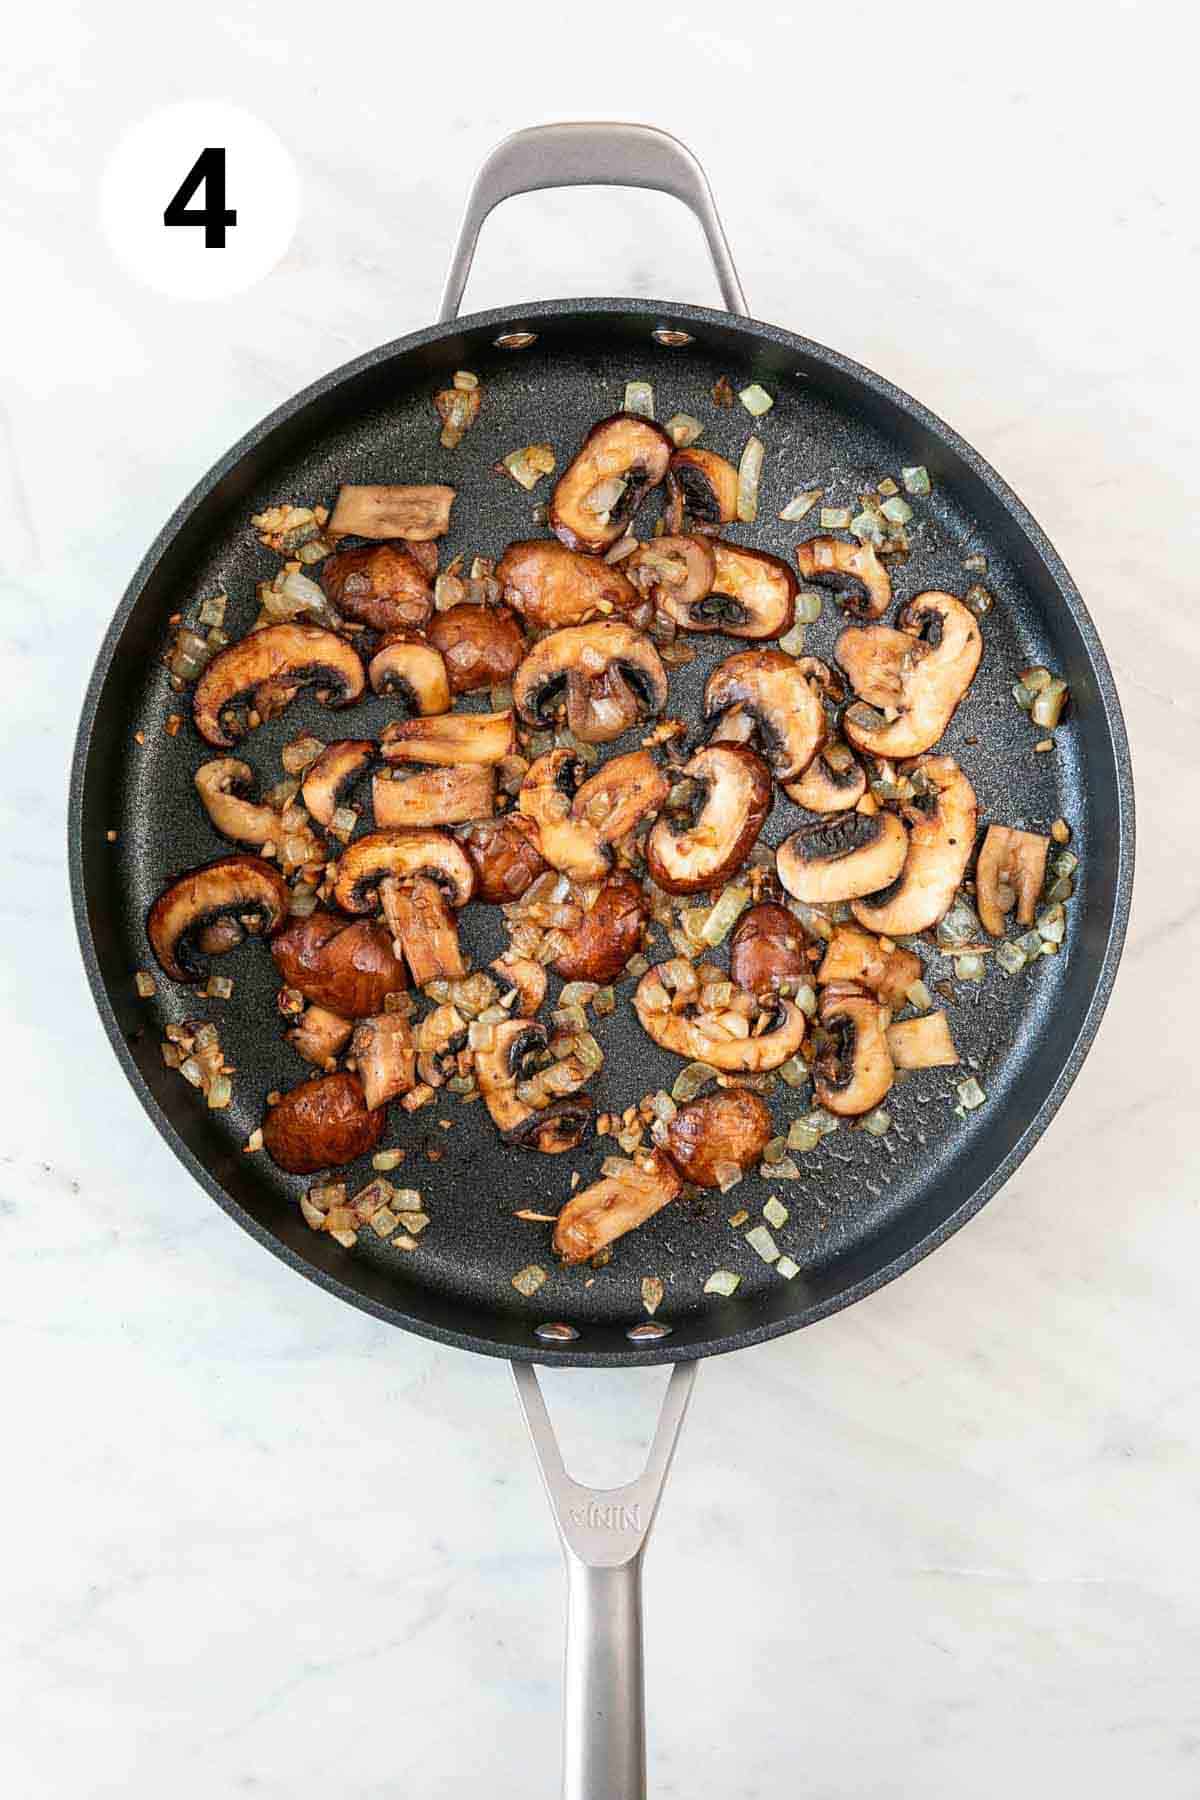 Onion, garlic, and mushrooms sautéed in a skillet.